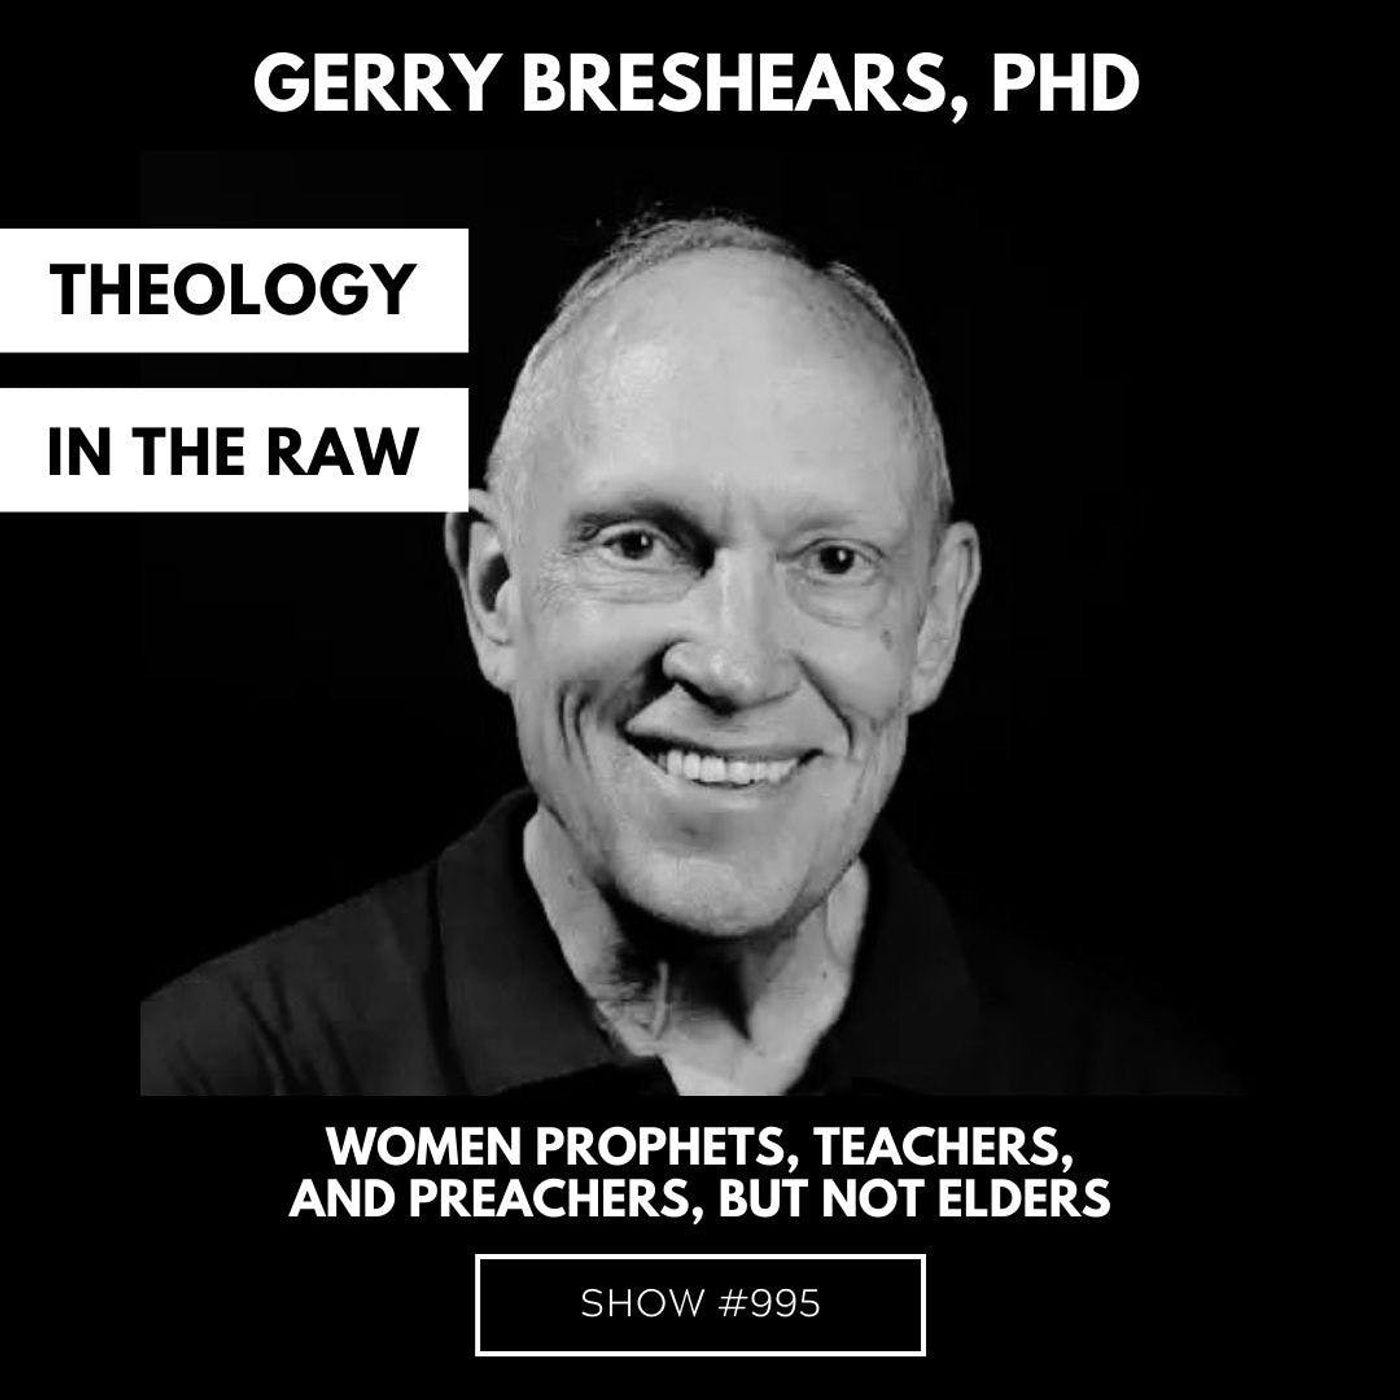 S9 Ep995: #995 - Women Prophets, Teachers, and Preachers, but not Elders: Dr. Gerry Breshears